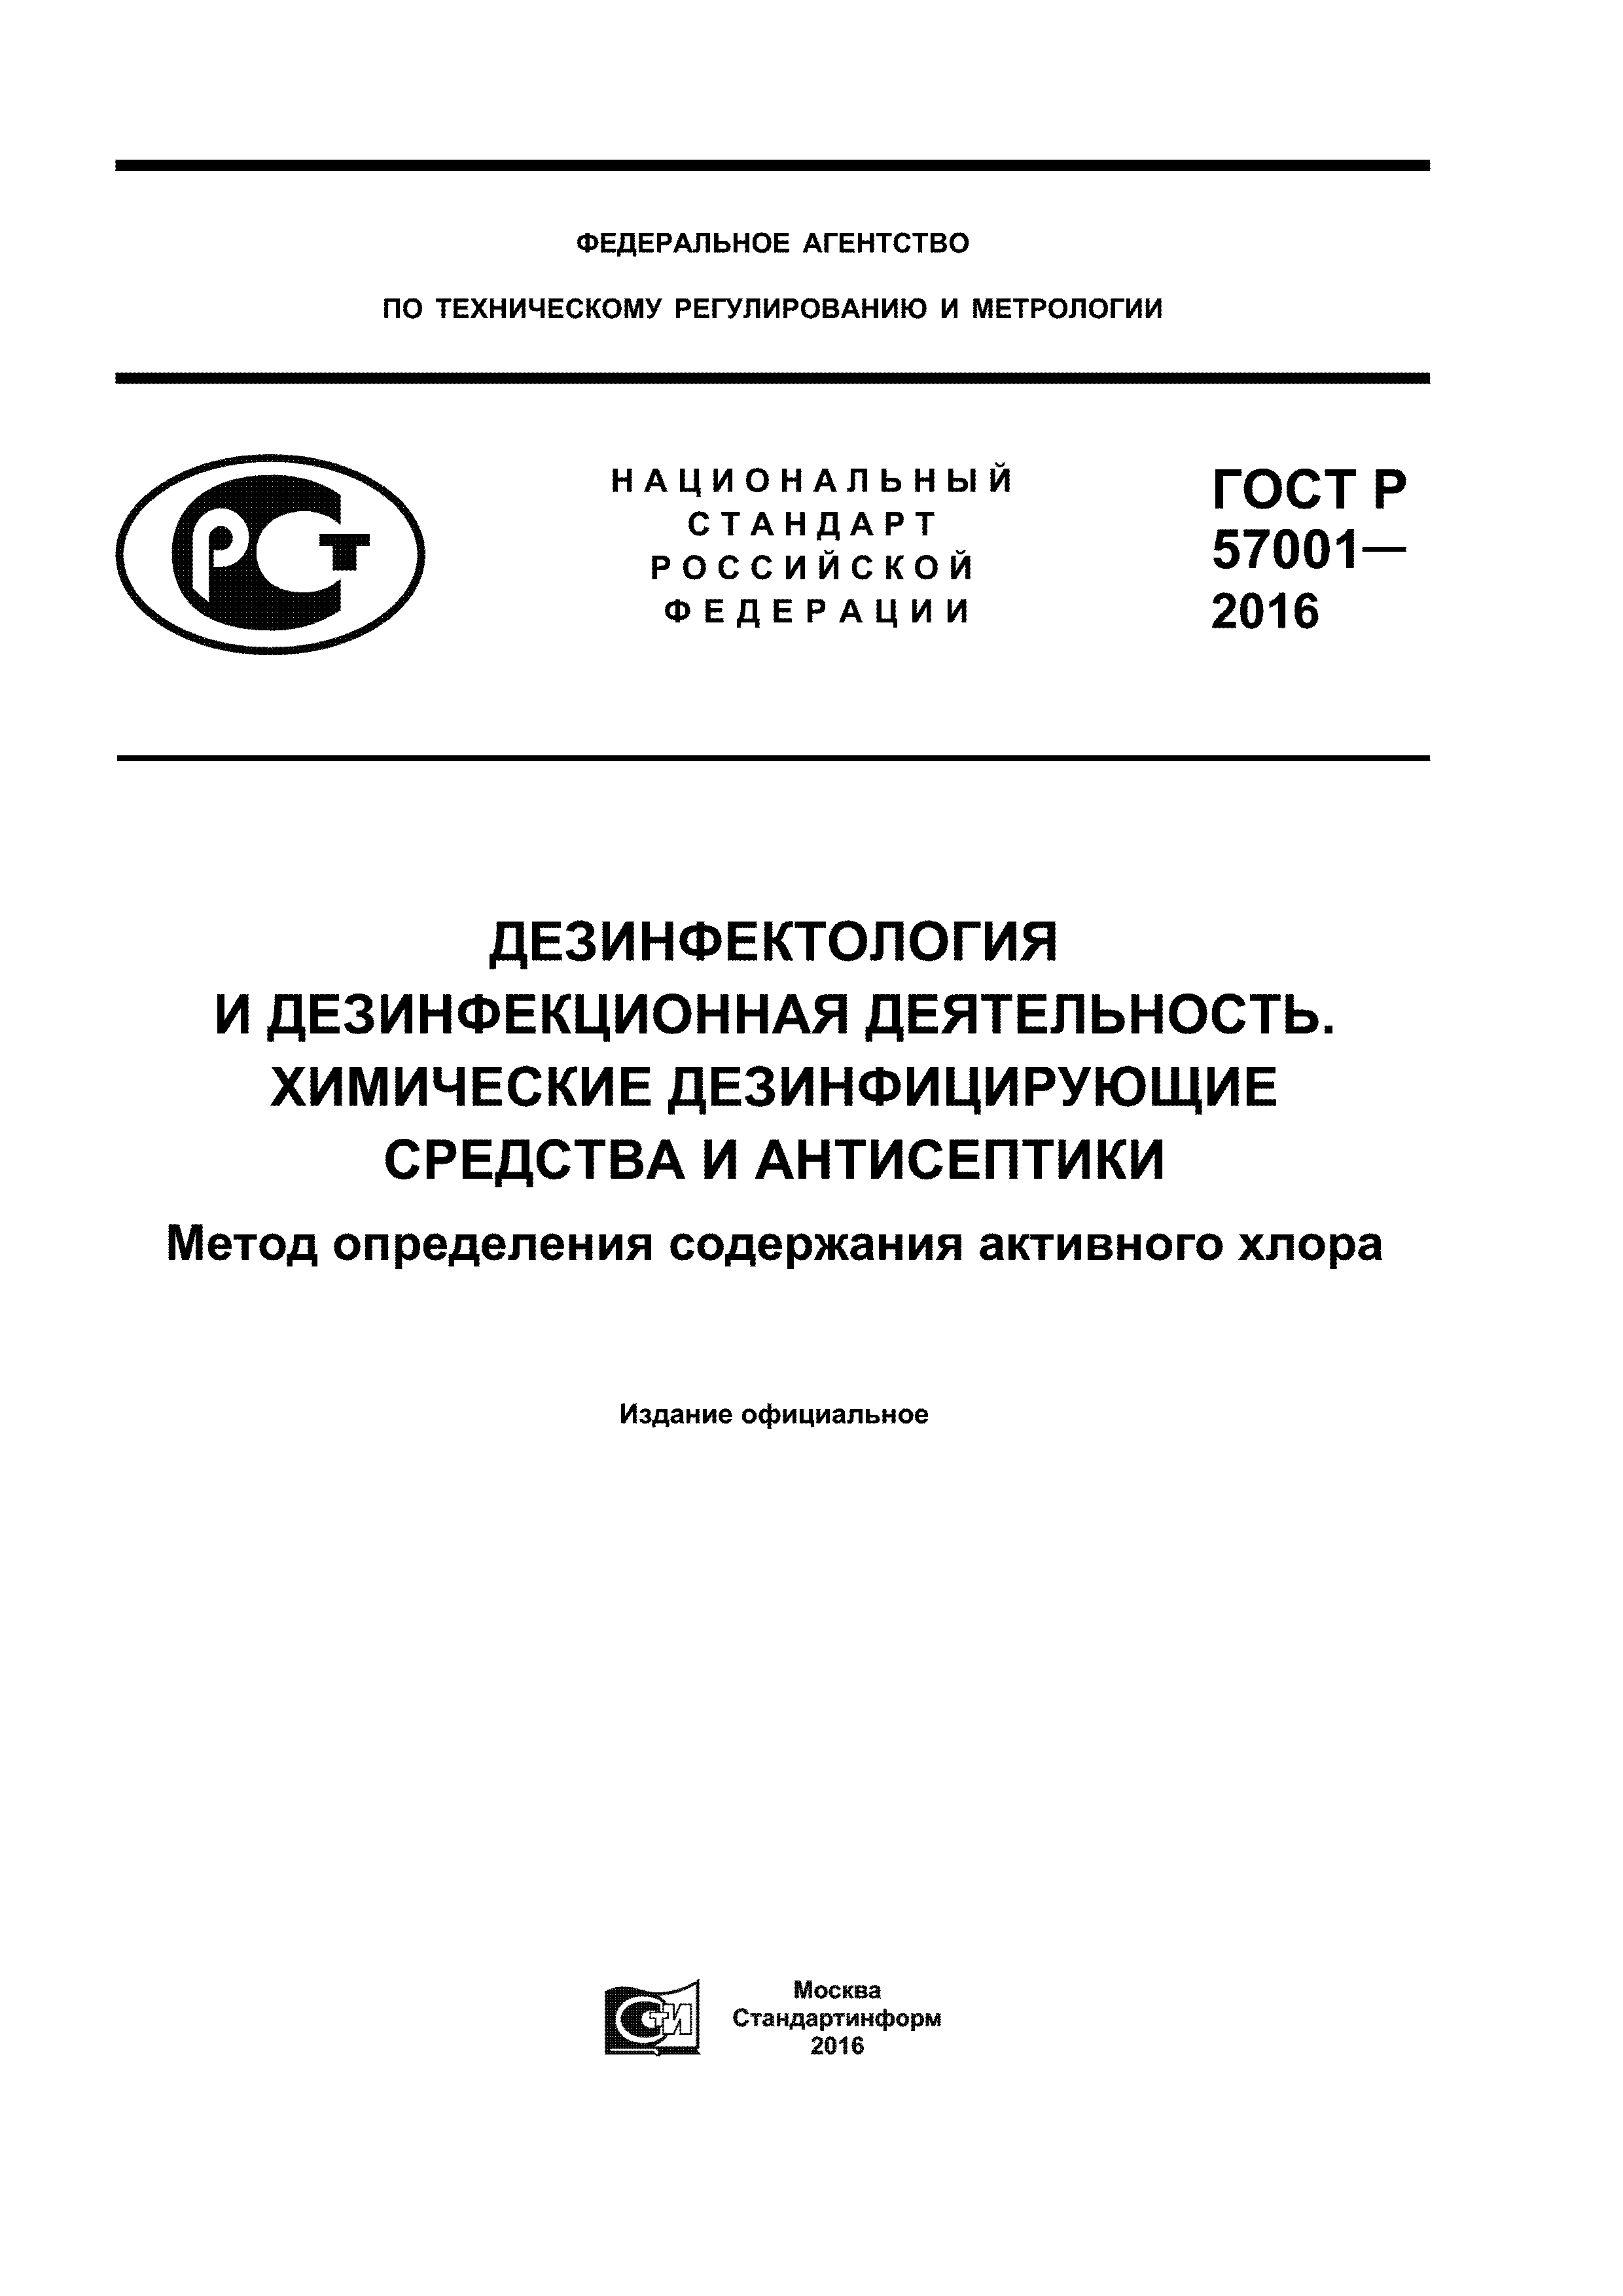 ГОСТ Р 57001-2016